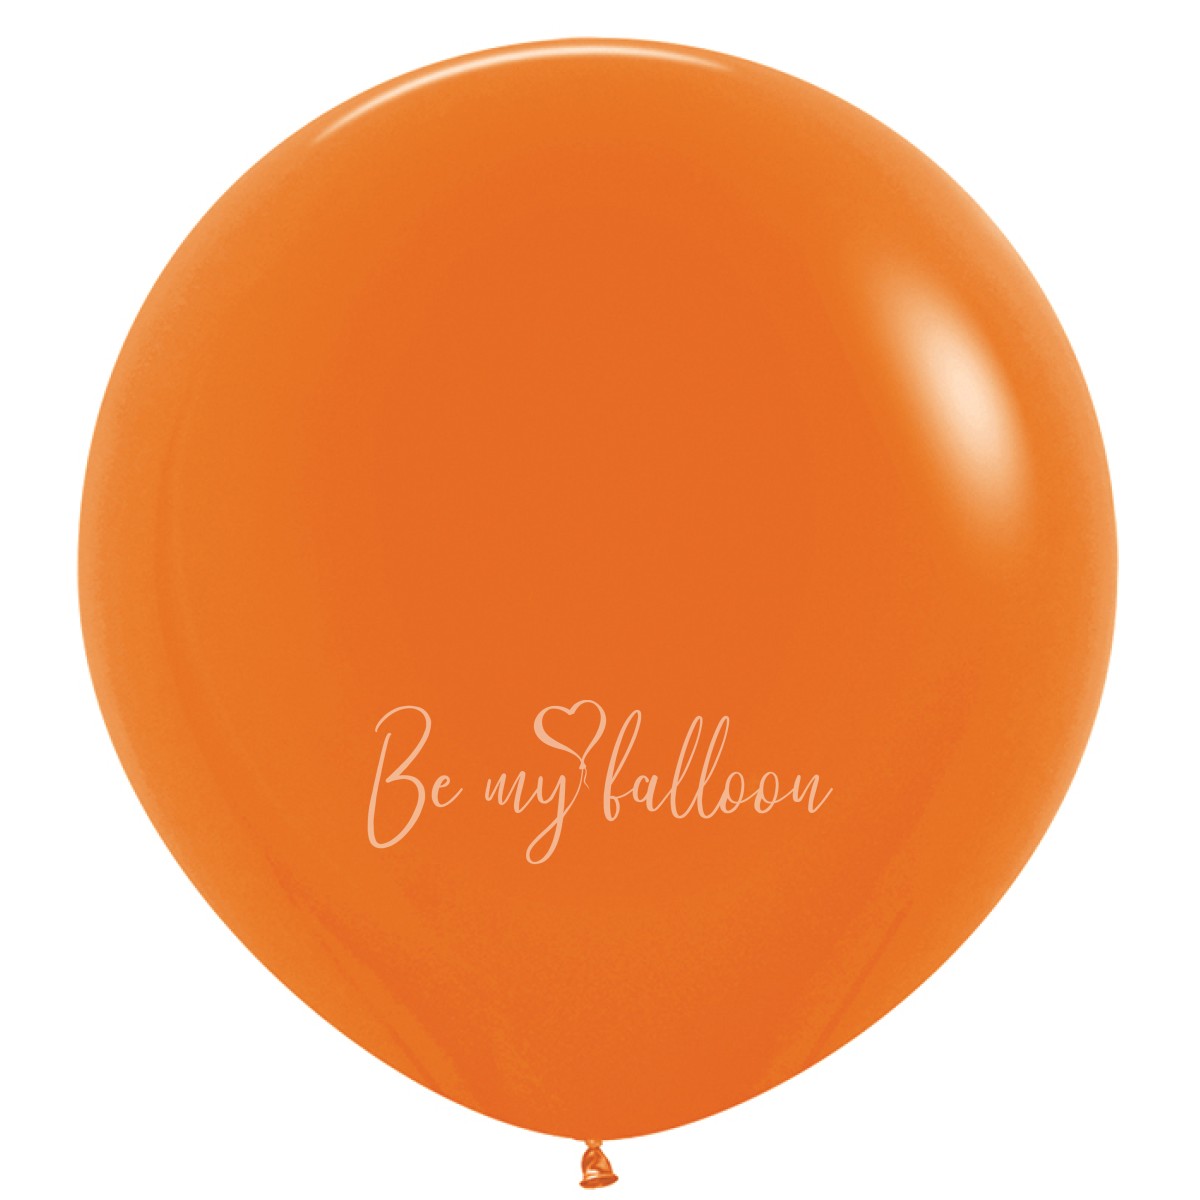 На оранжевом шаре. Оранжевый шар Семпертекс. Оранжевый шарик. Оранжевый воздушный шарик. Воздушный шарик круглый.